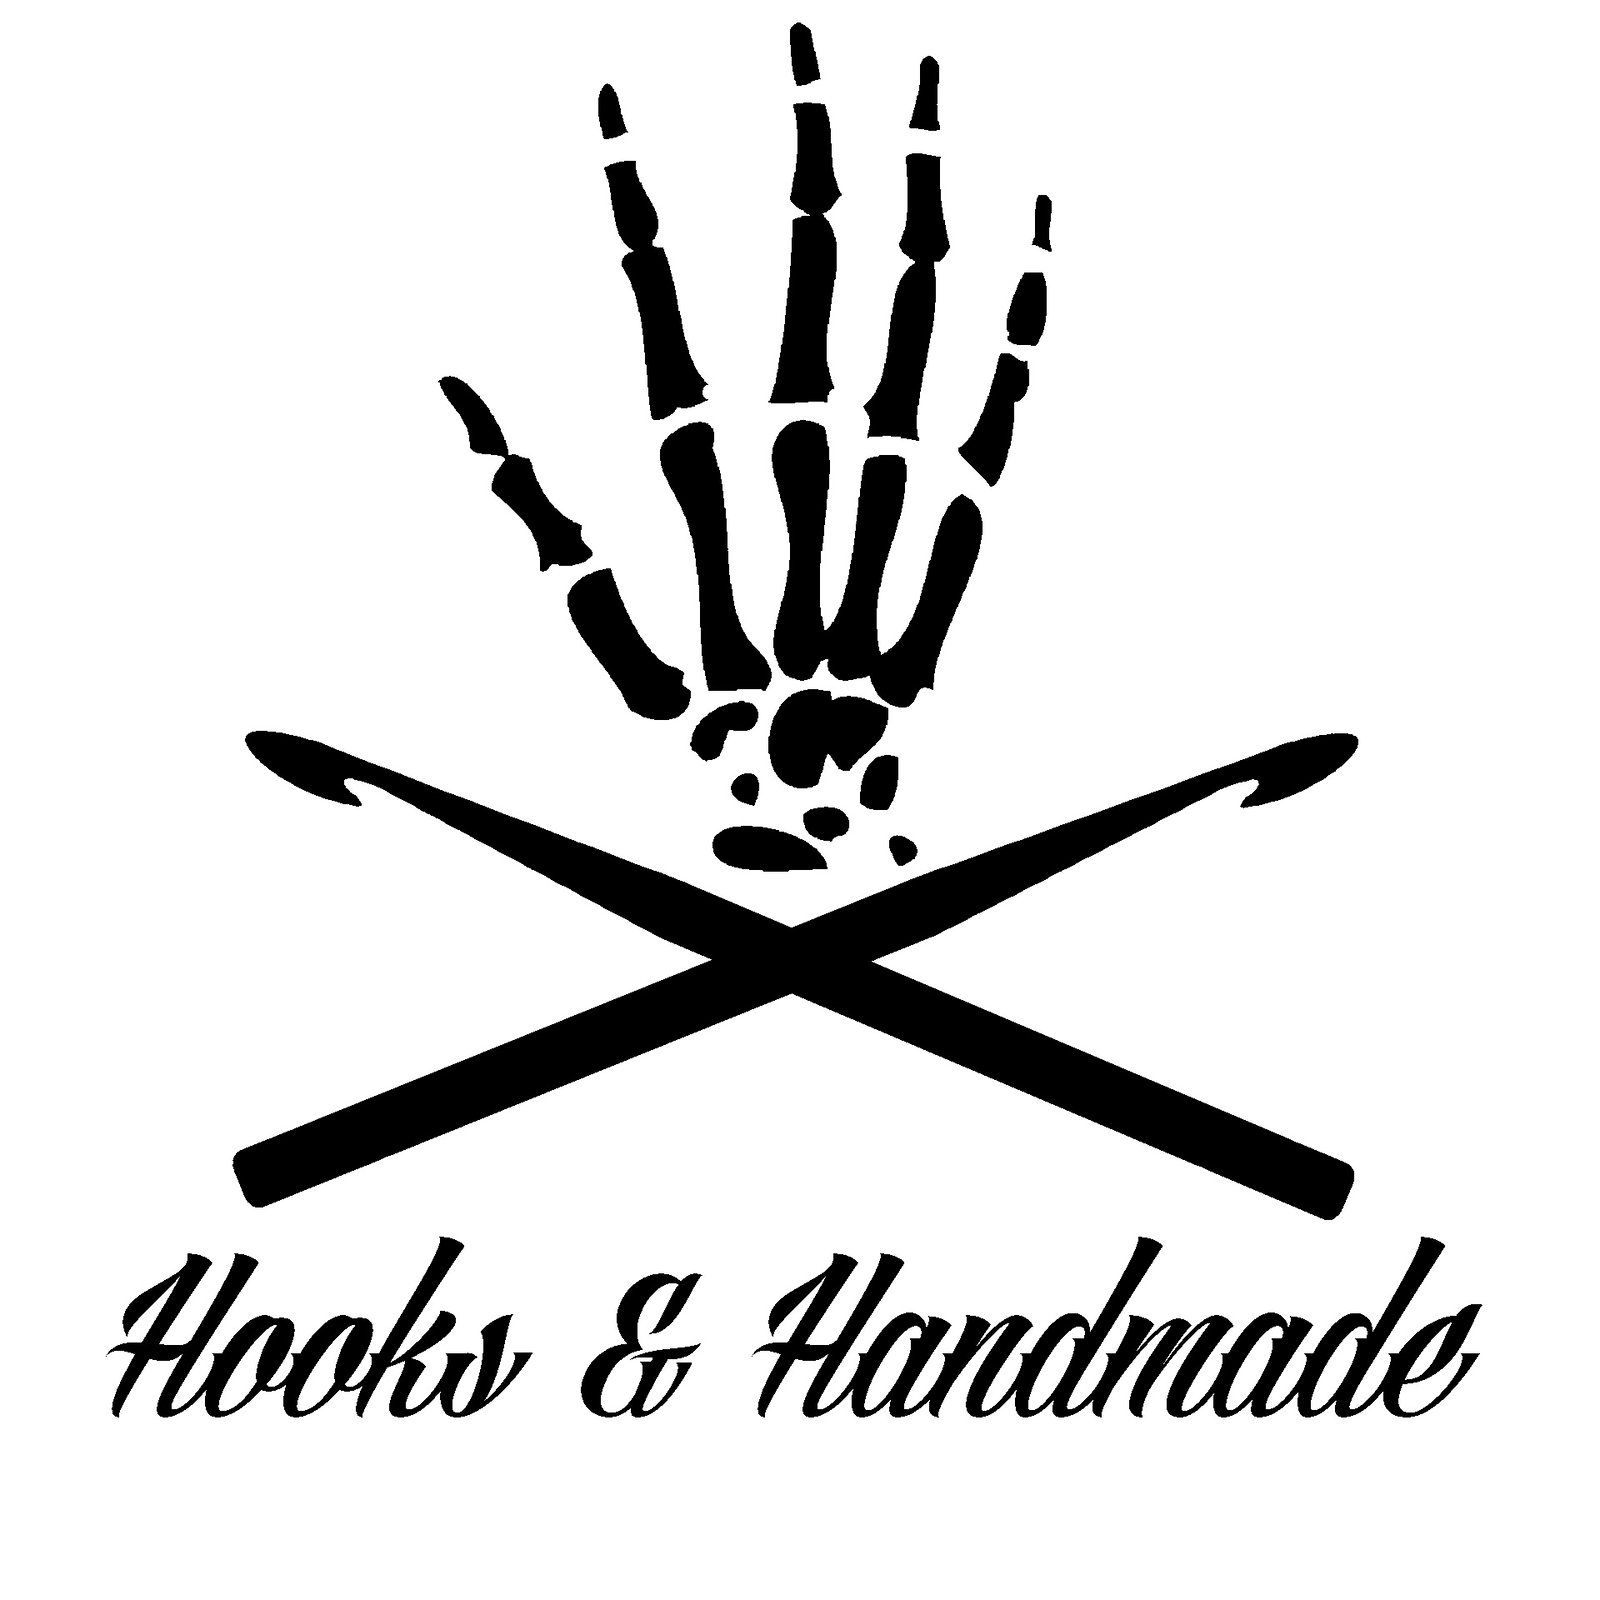 Hooks and Handmade®